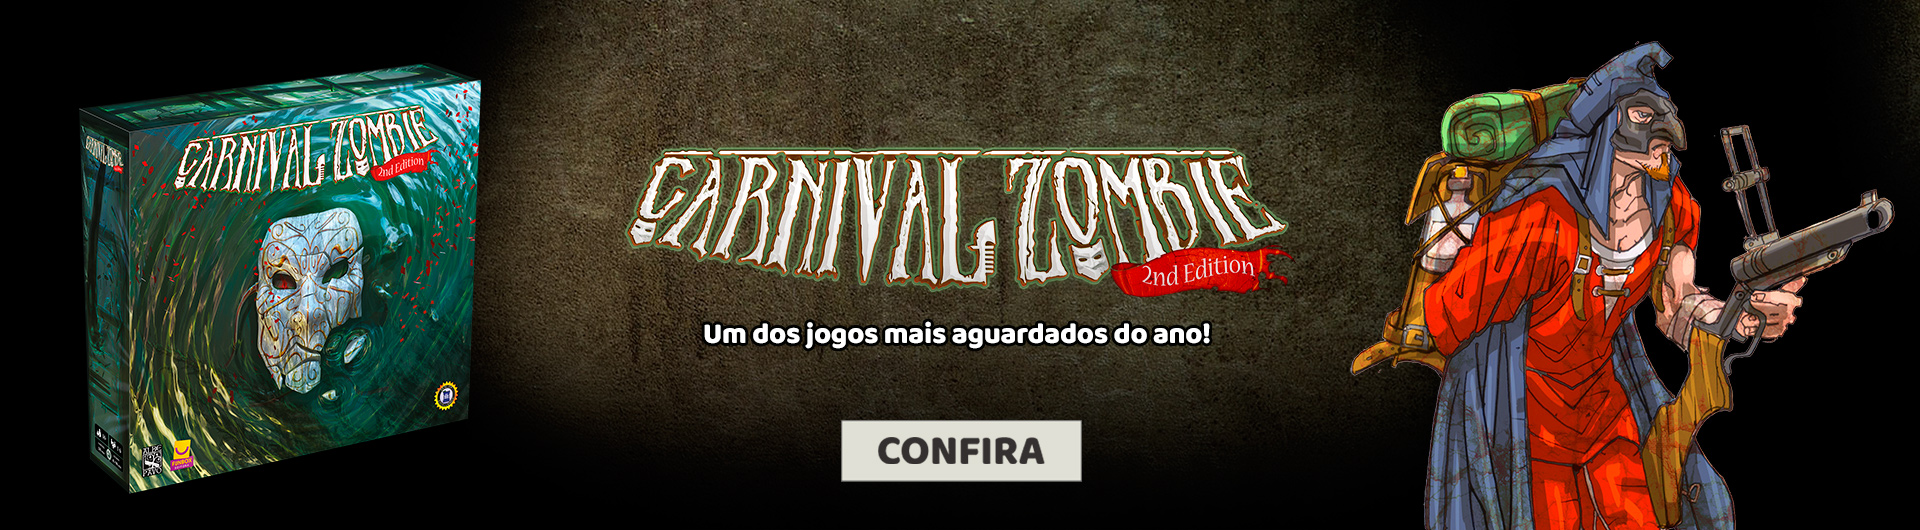 1 carnival zombie